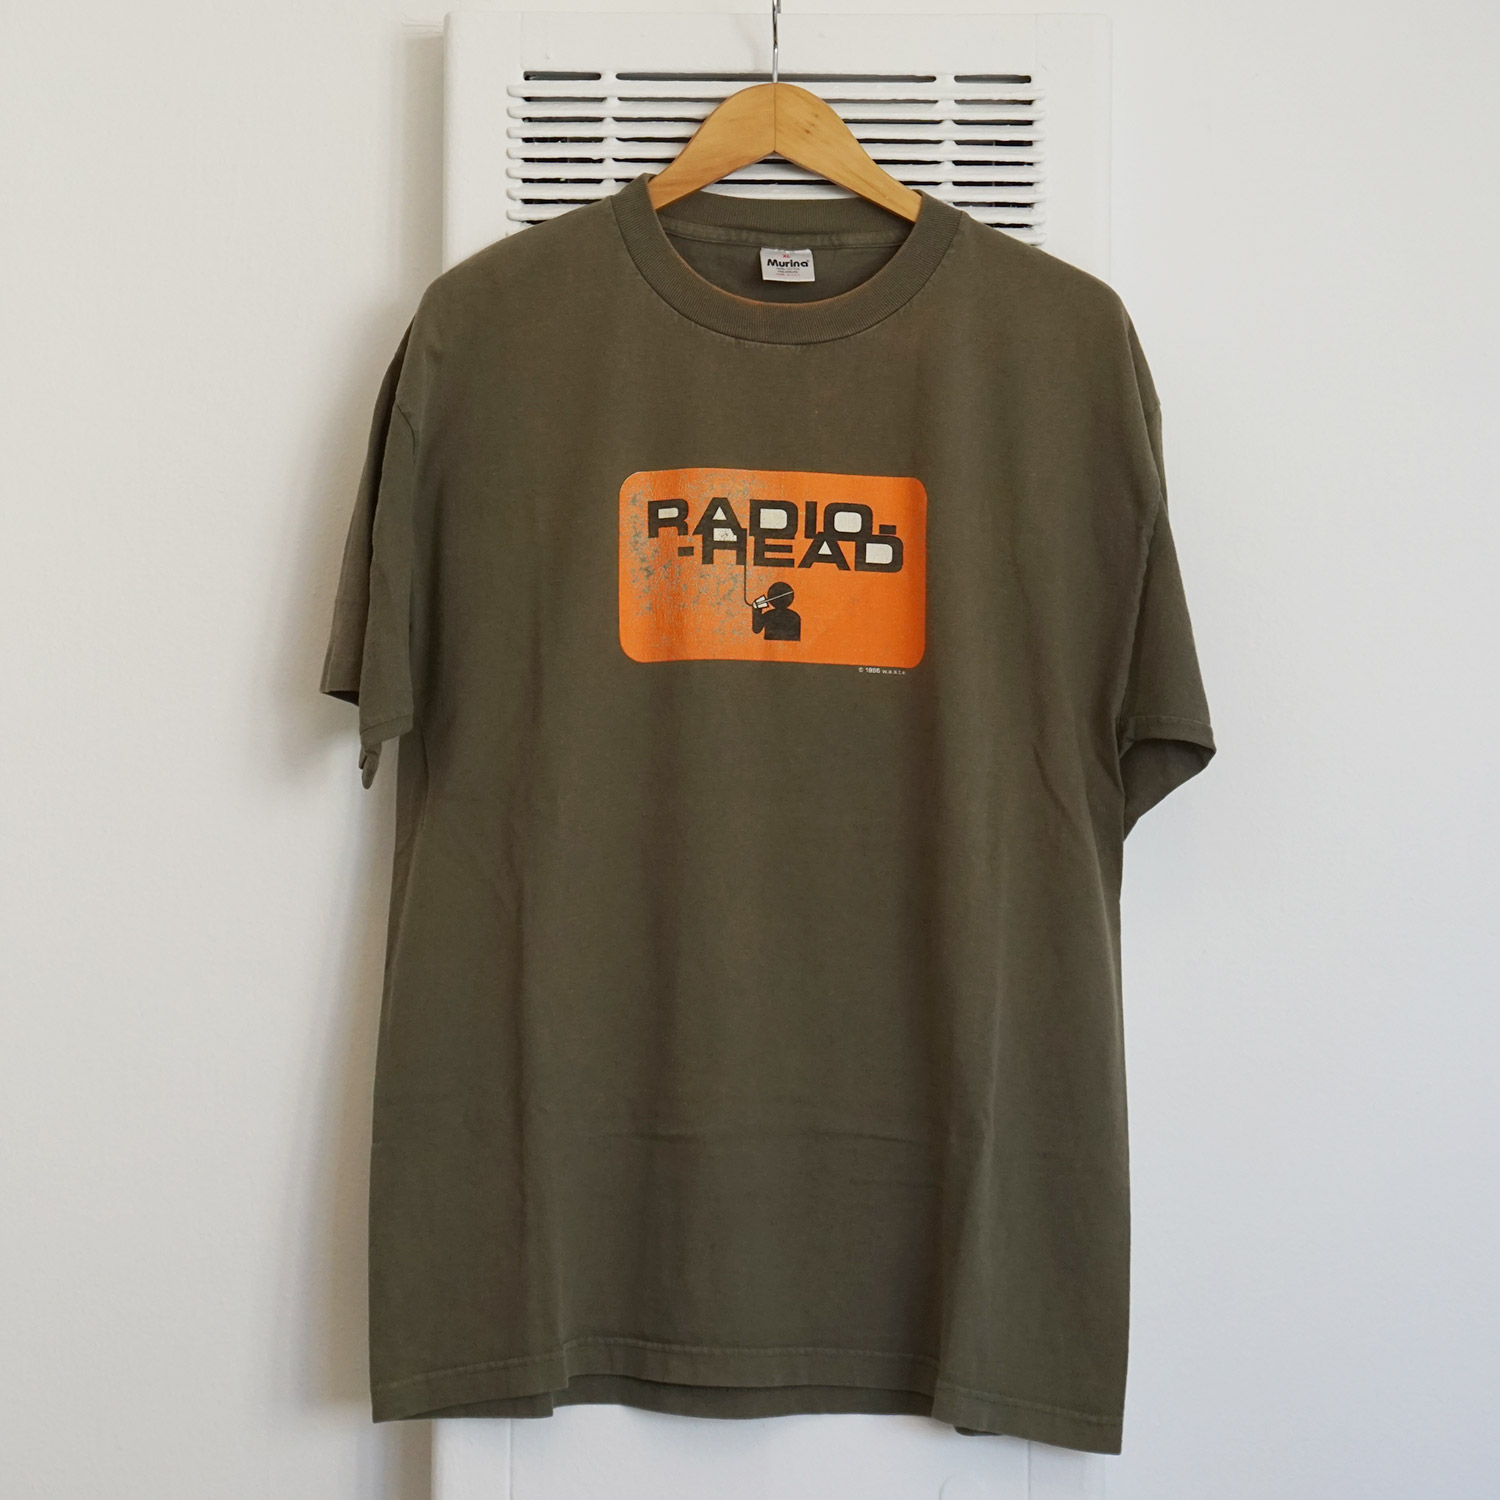 Vintage Radiohead No Firing T-shirt, Front